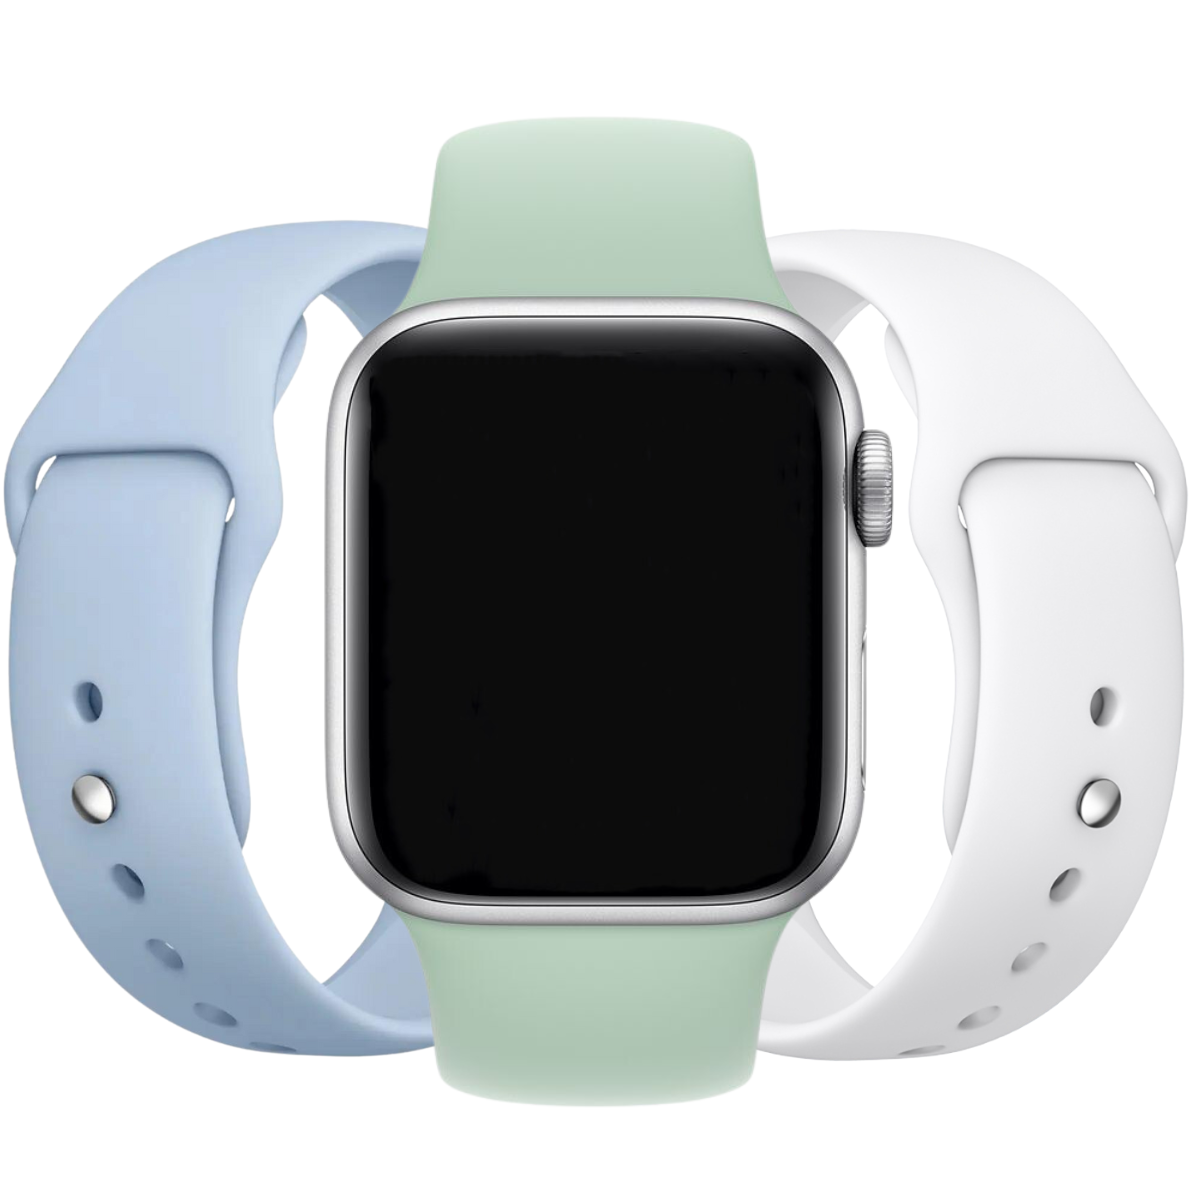 Spring sports Apple Watch bundle deal - 3x